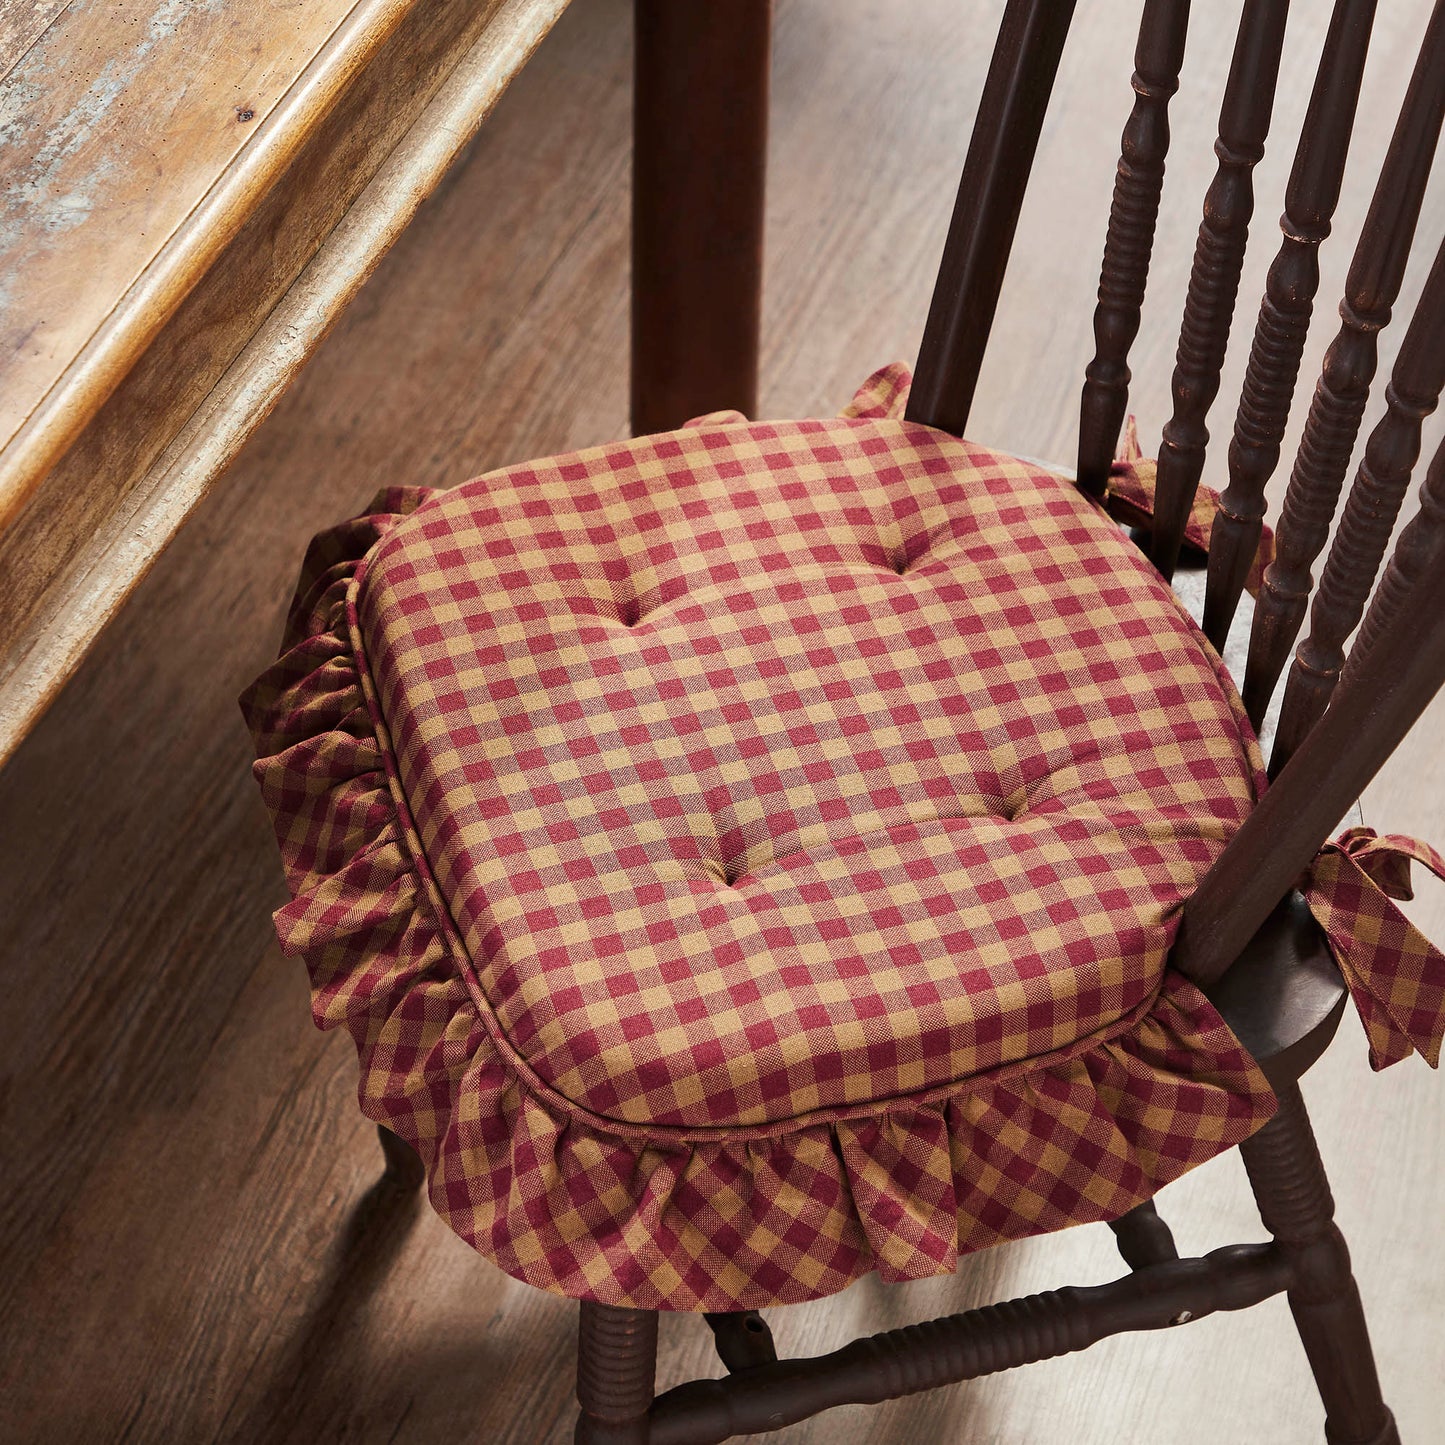 Burgundy Check Ruffled Chair Pad 16.5x18 SpadezStore